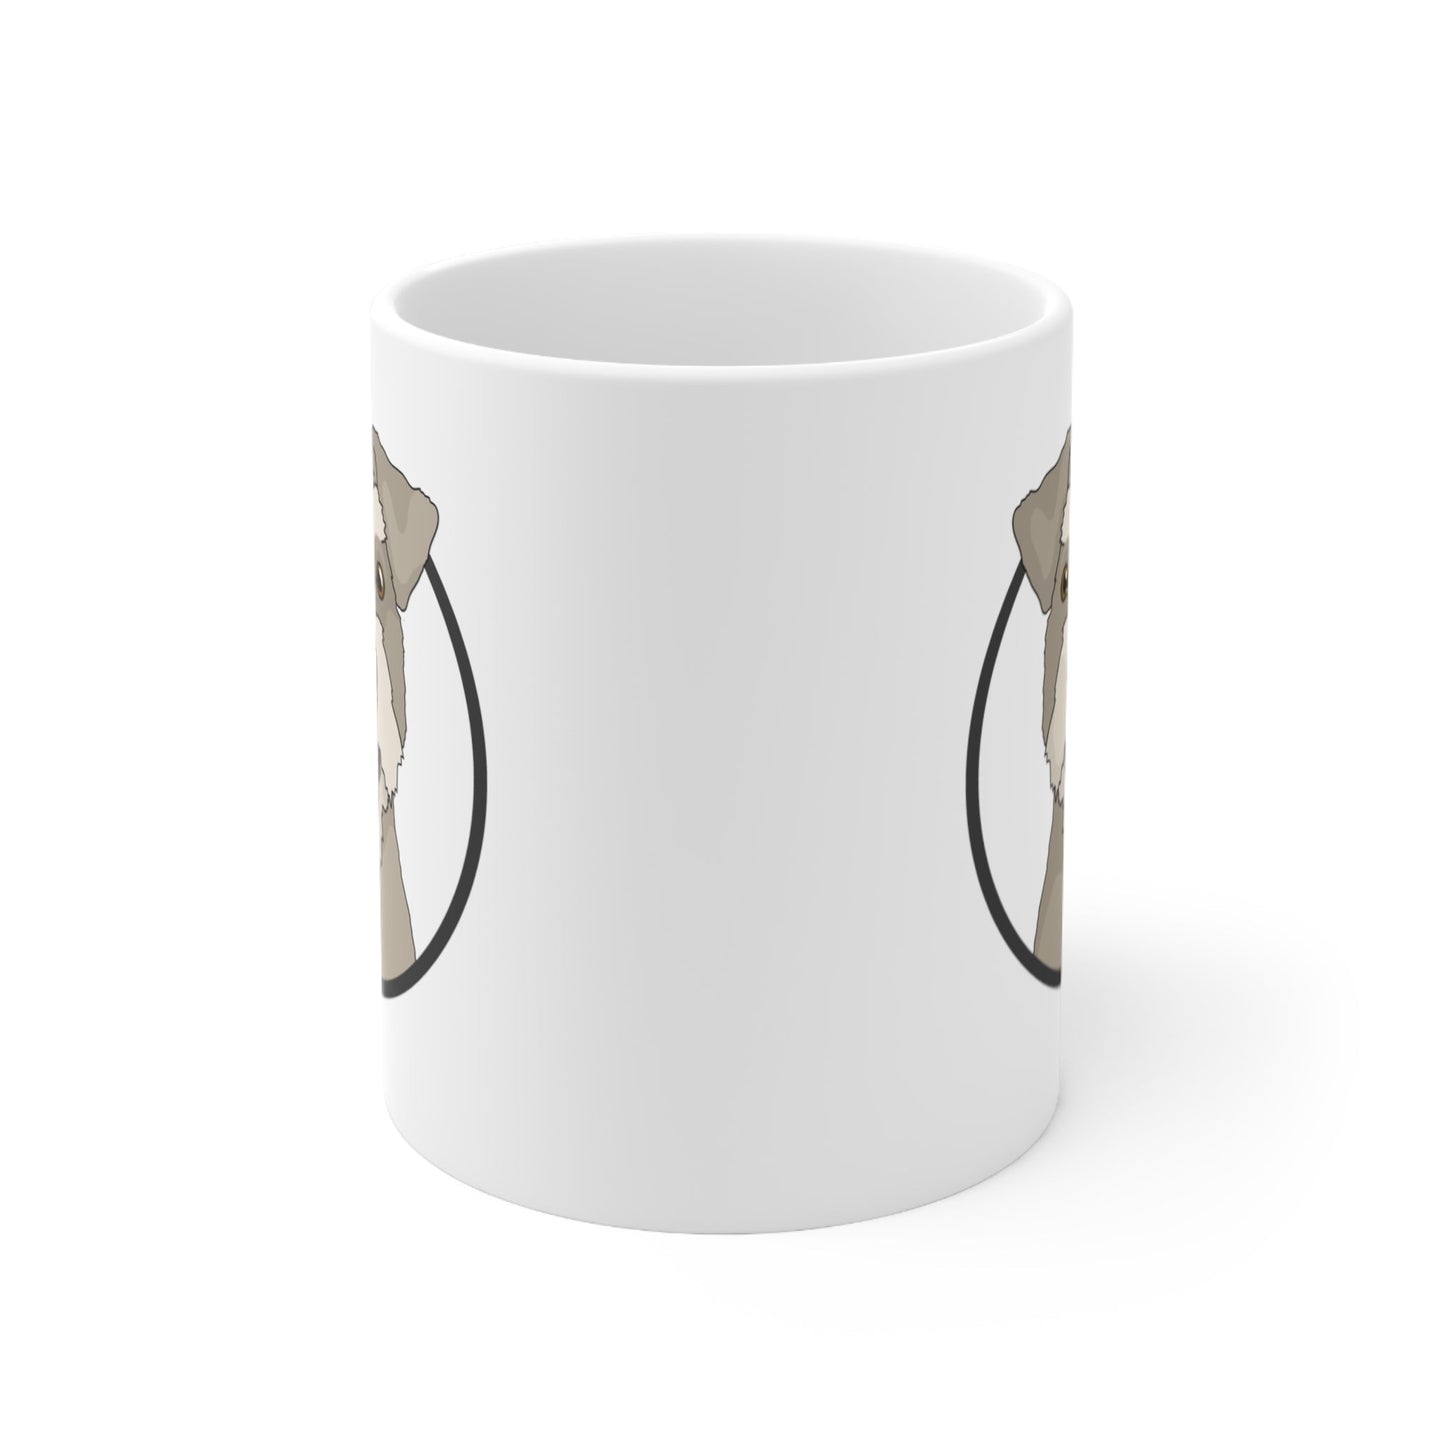 Miniature Schnauzer | Mug - Detezi Designs-27496414372679989684